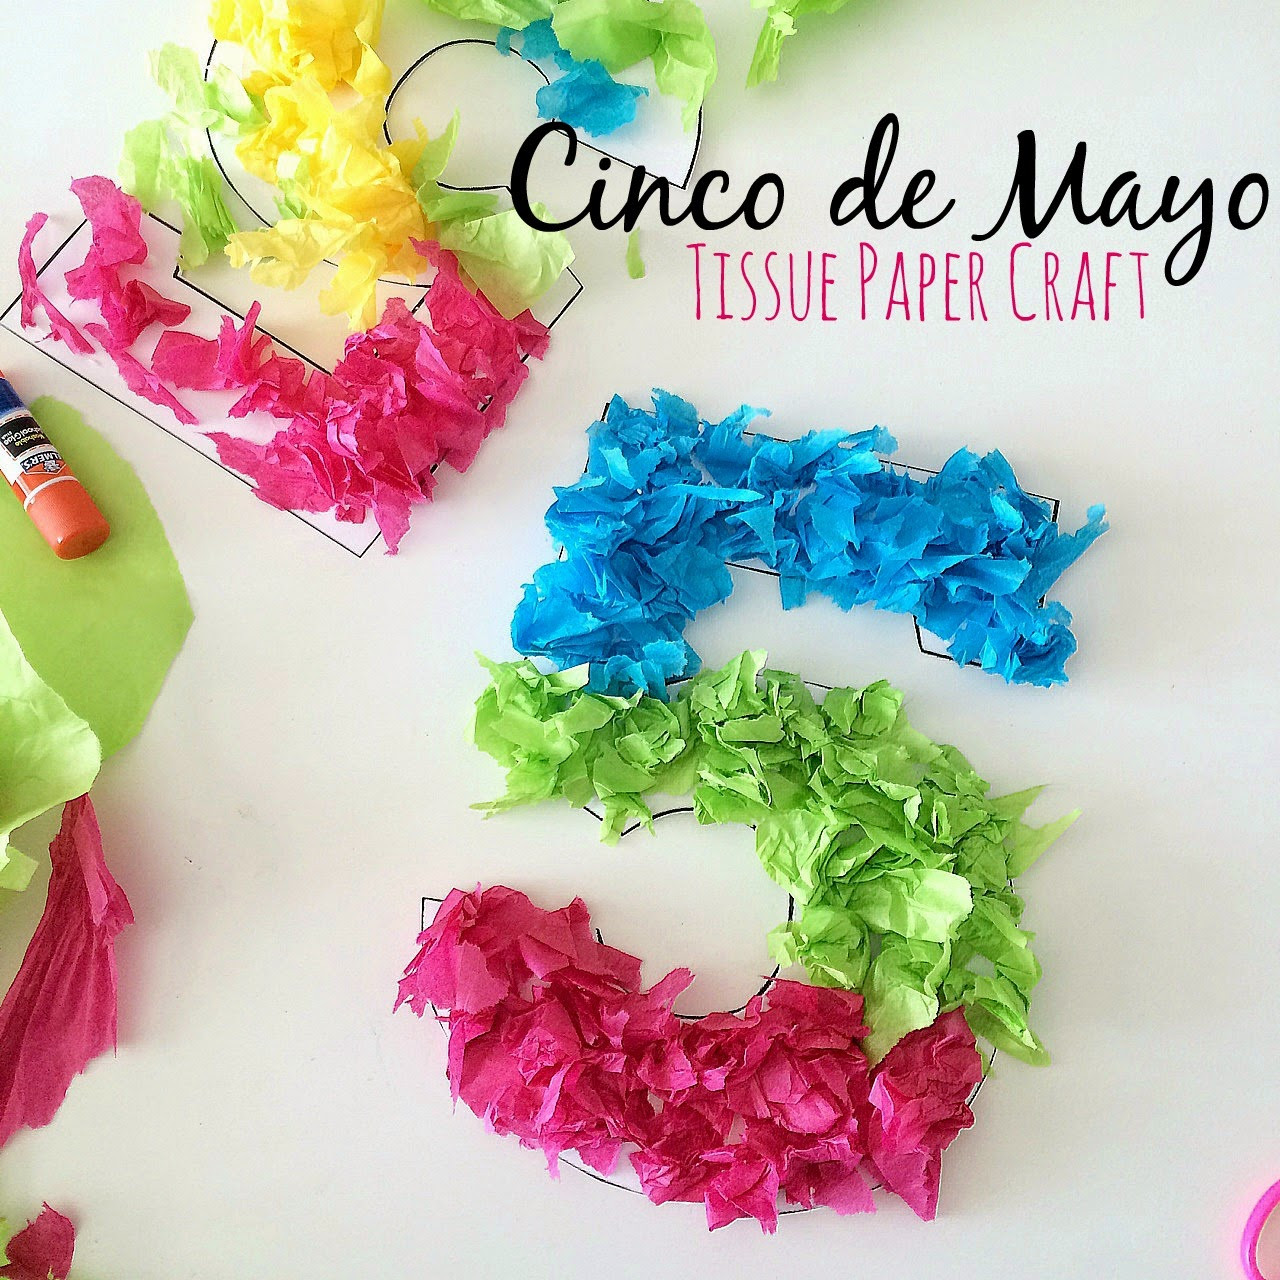 Cinco De Mayo Kid Craft Ideas
 The Best of Cinco De Mayo Crafts Food and Party Ideas